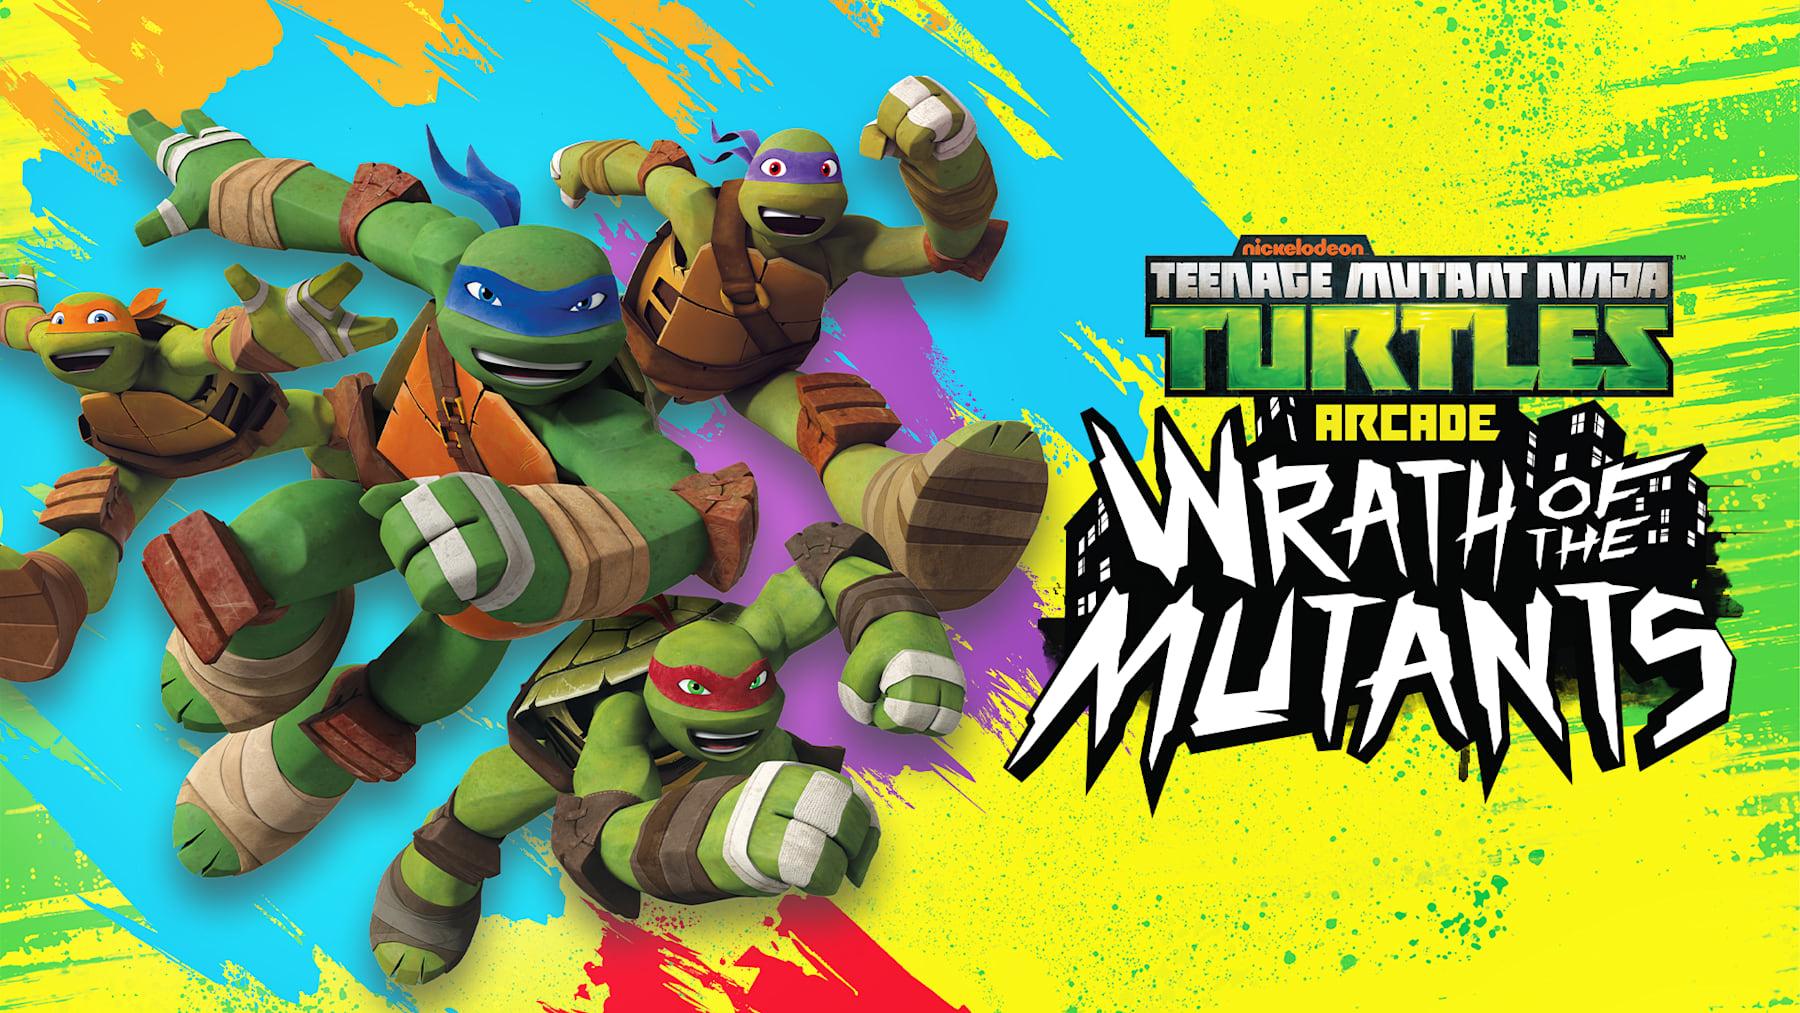 忍者神龟街机 变种人之怒 Teenage Mutant Ninja Turtles Arcade Wrath of the Mutants|官方英文|本体+1.0.1升补|NSZ|原版|